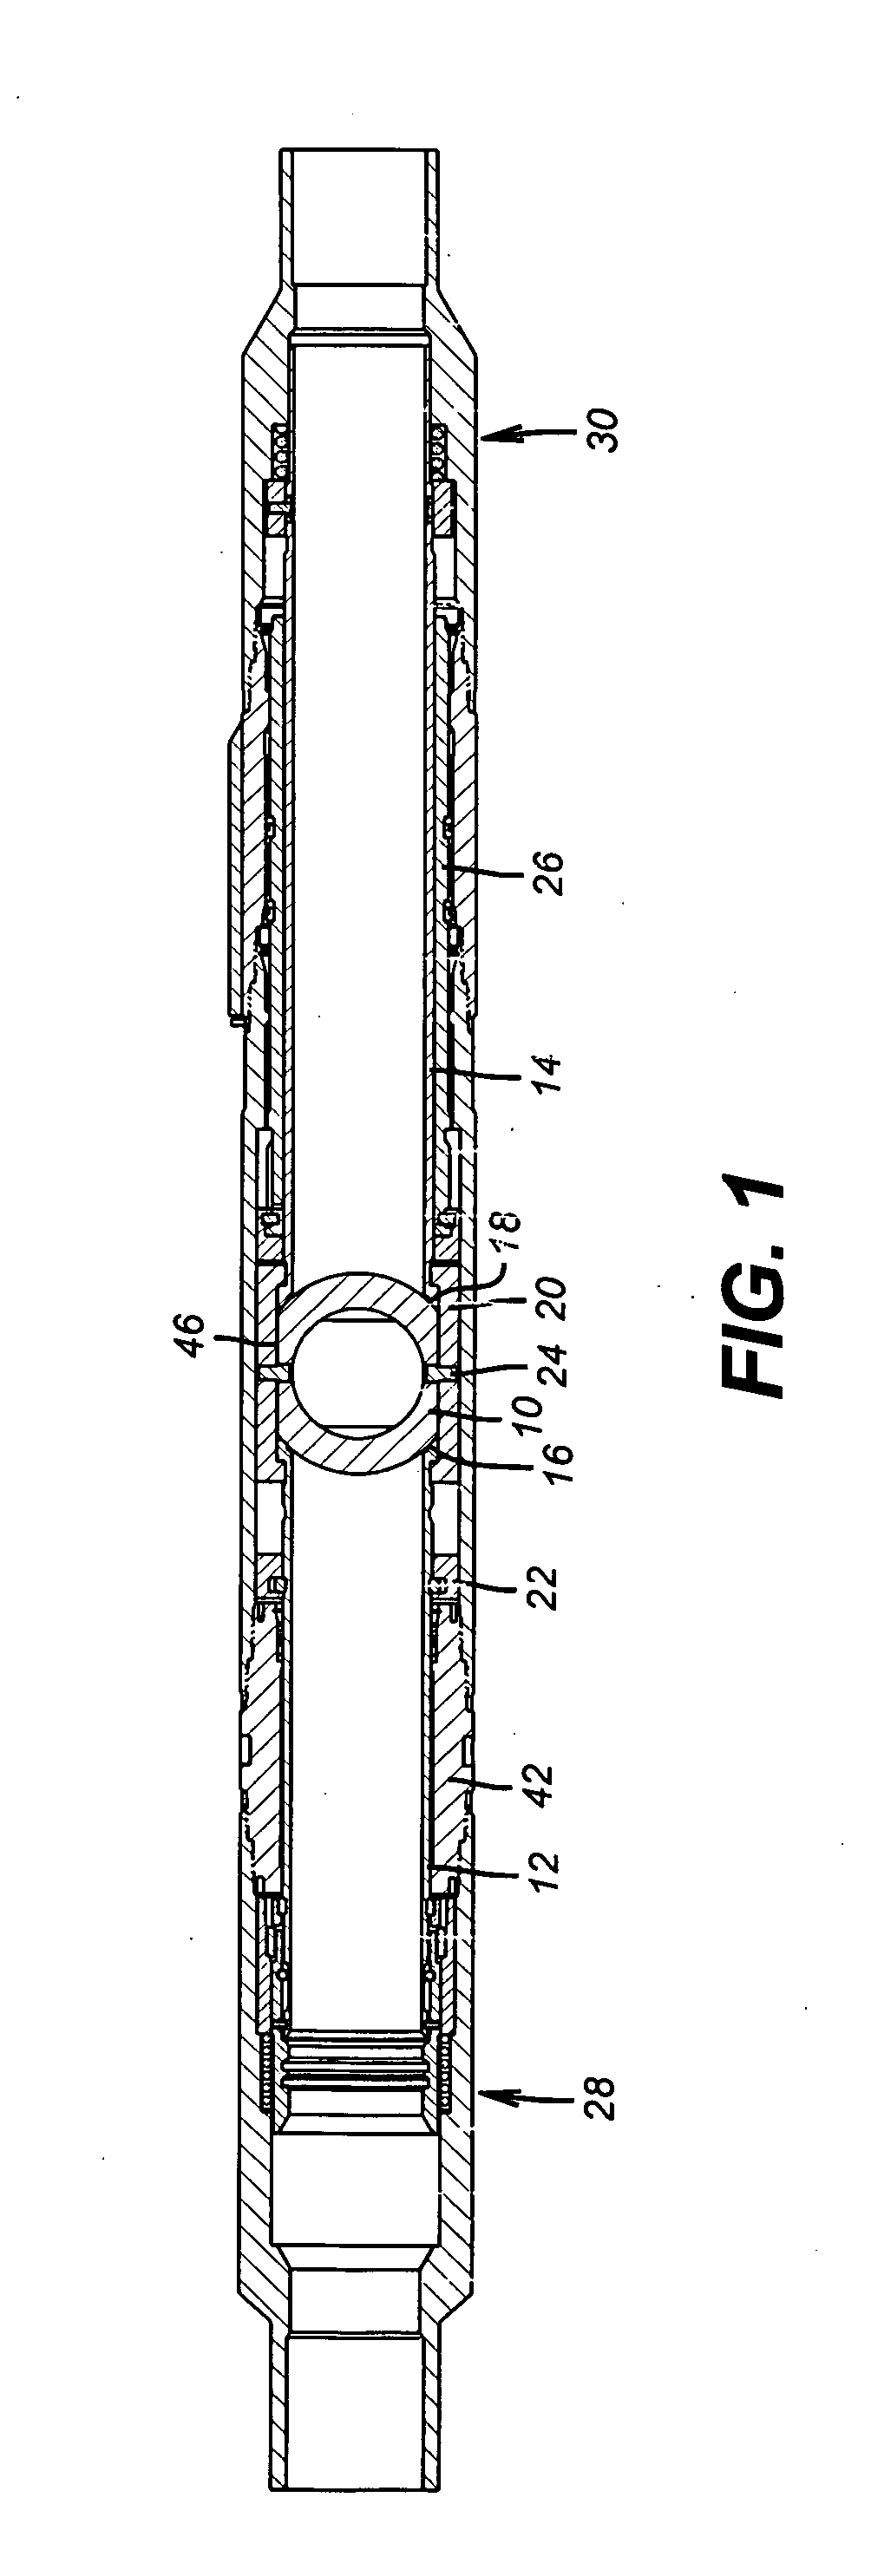 Downhole lubricator valve